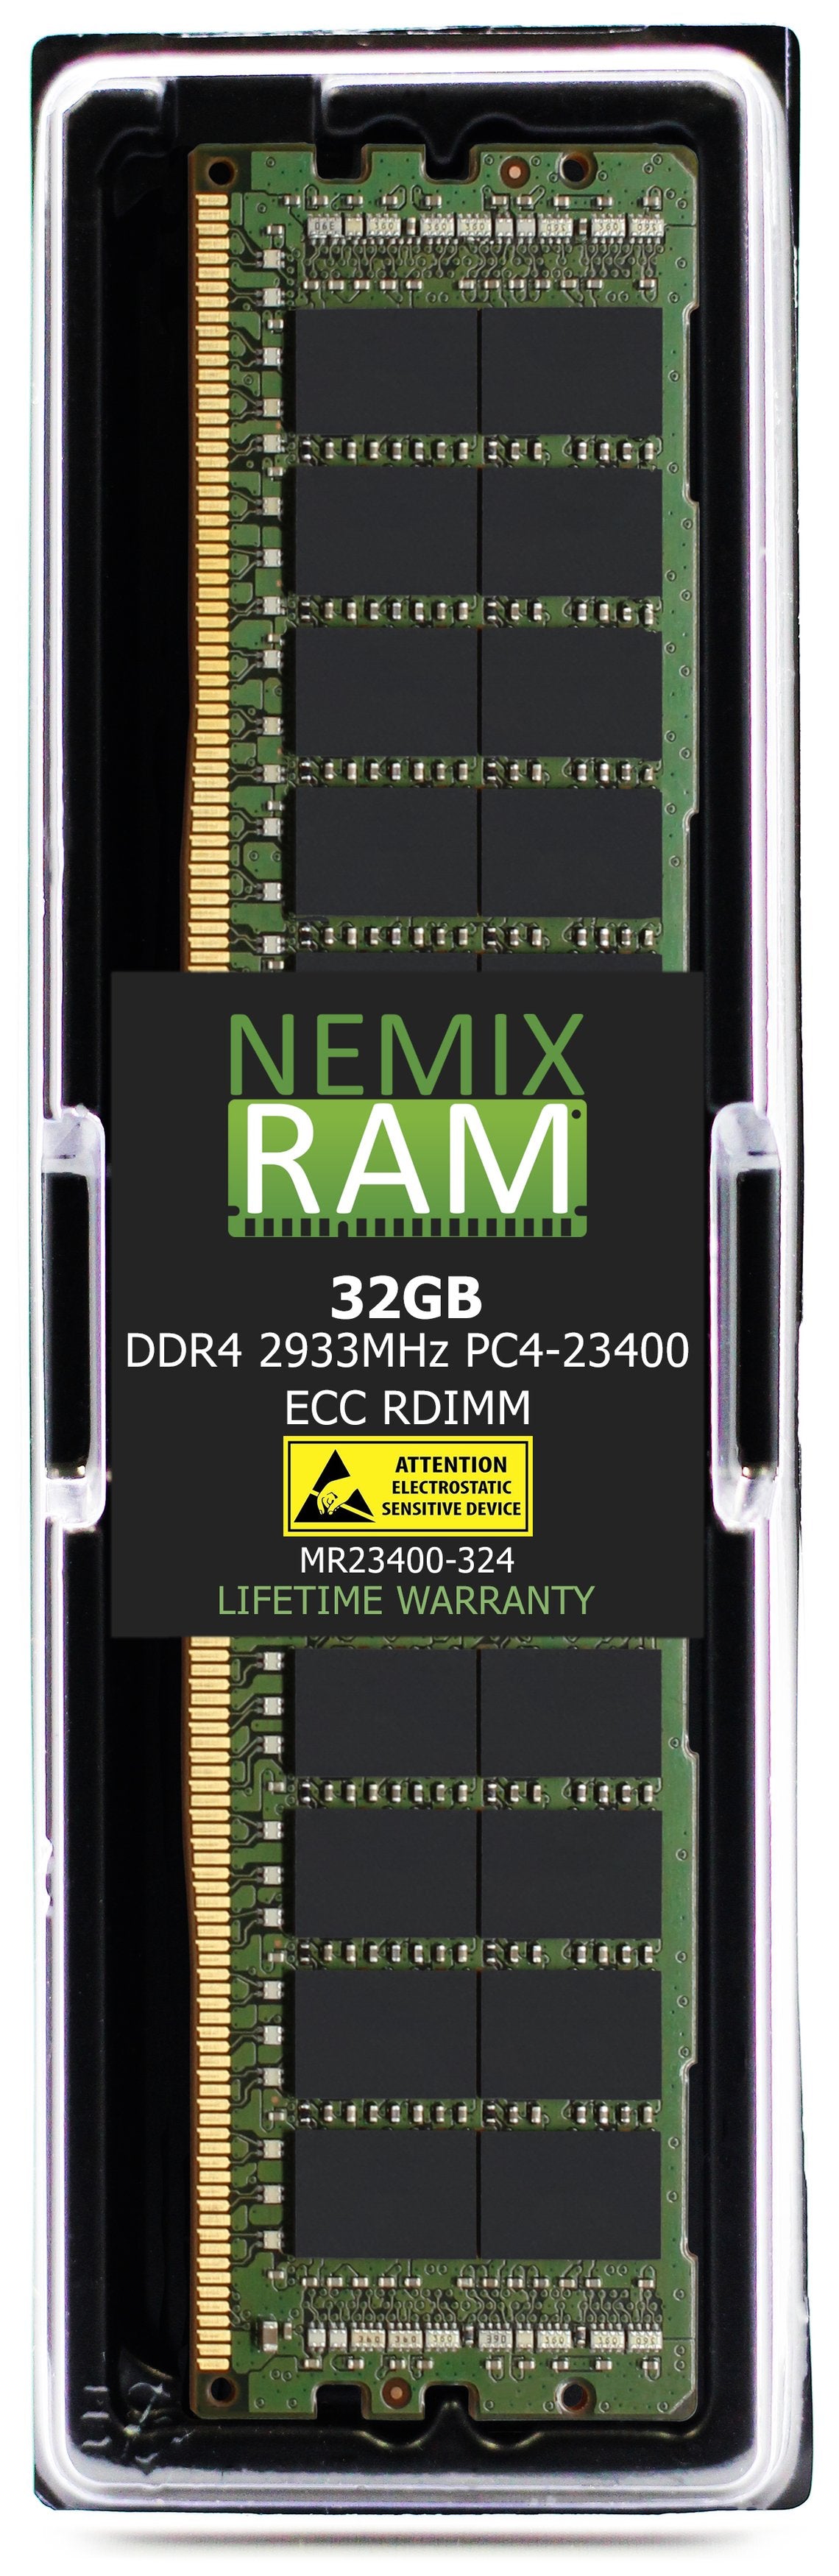 32GB DDR4 2933MHZ PC4-23400 RDIMM Compatible with Supermicro MEM-DR432L-SL03-ER29